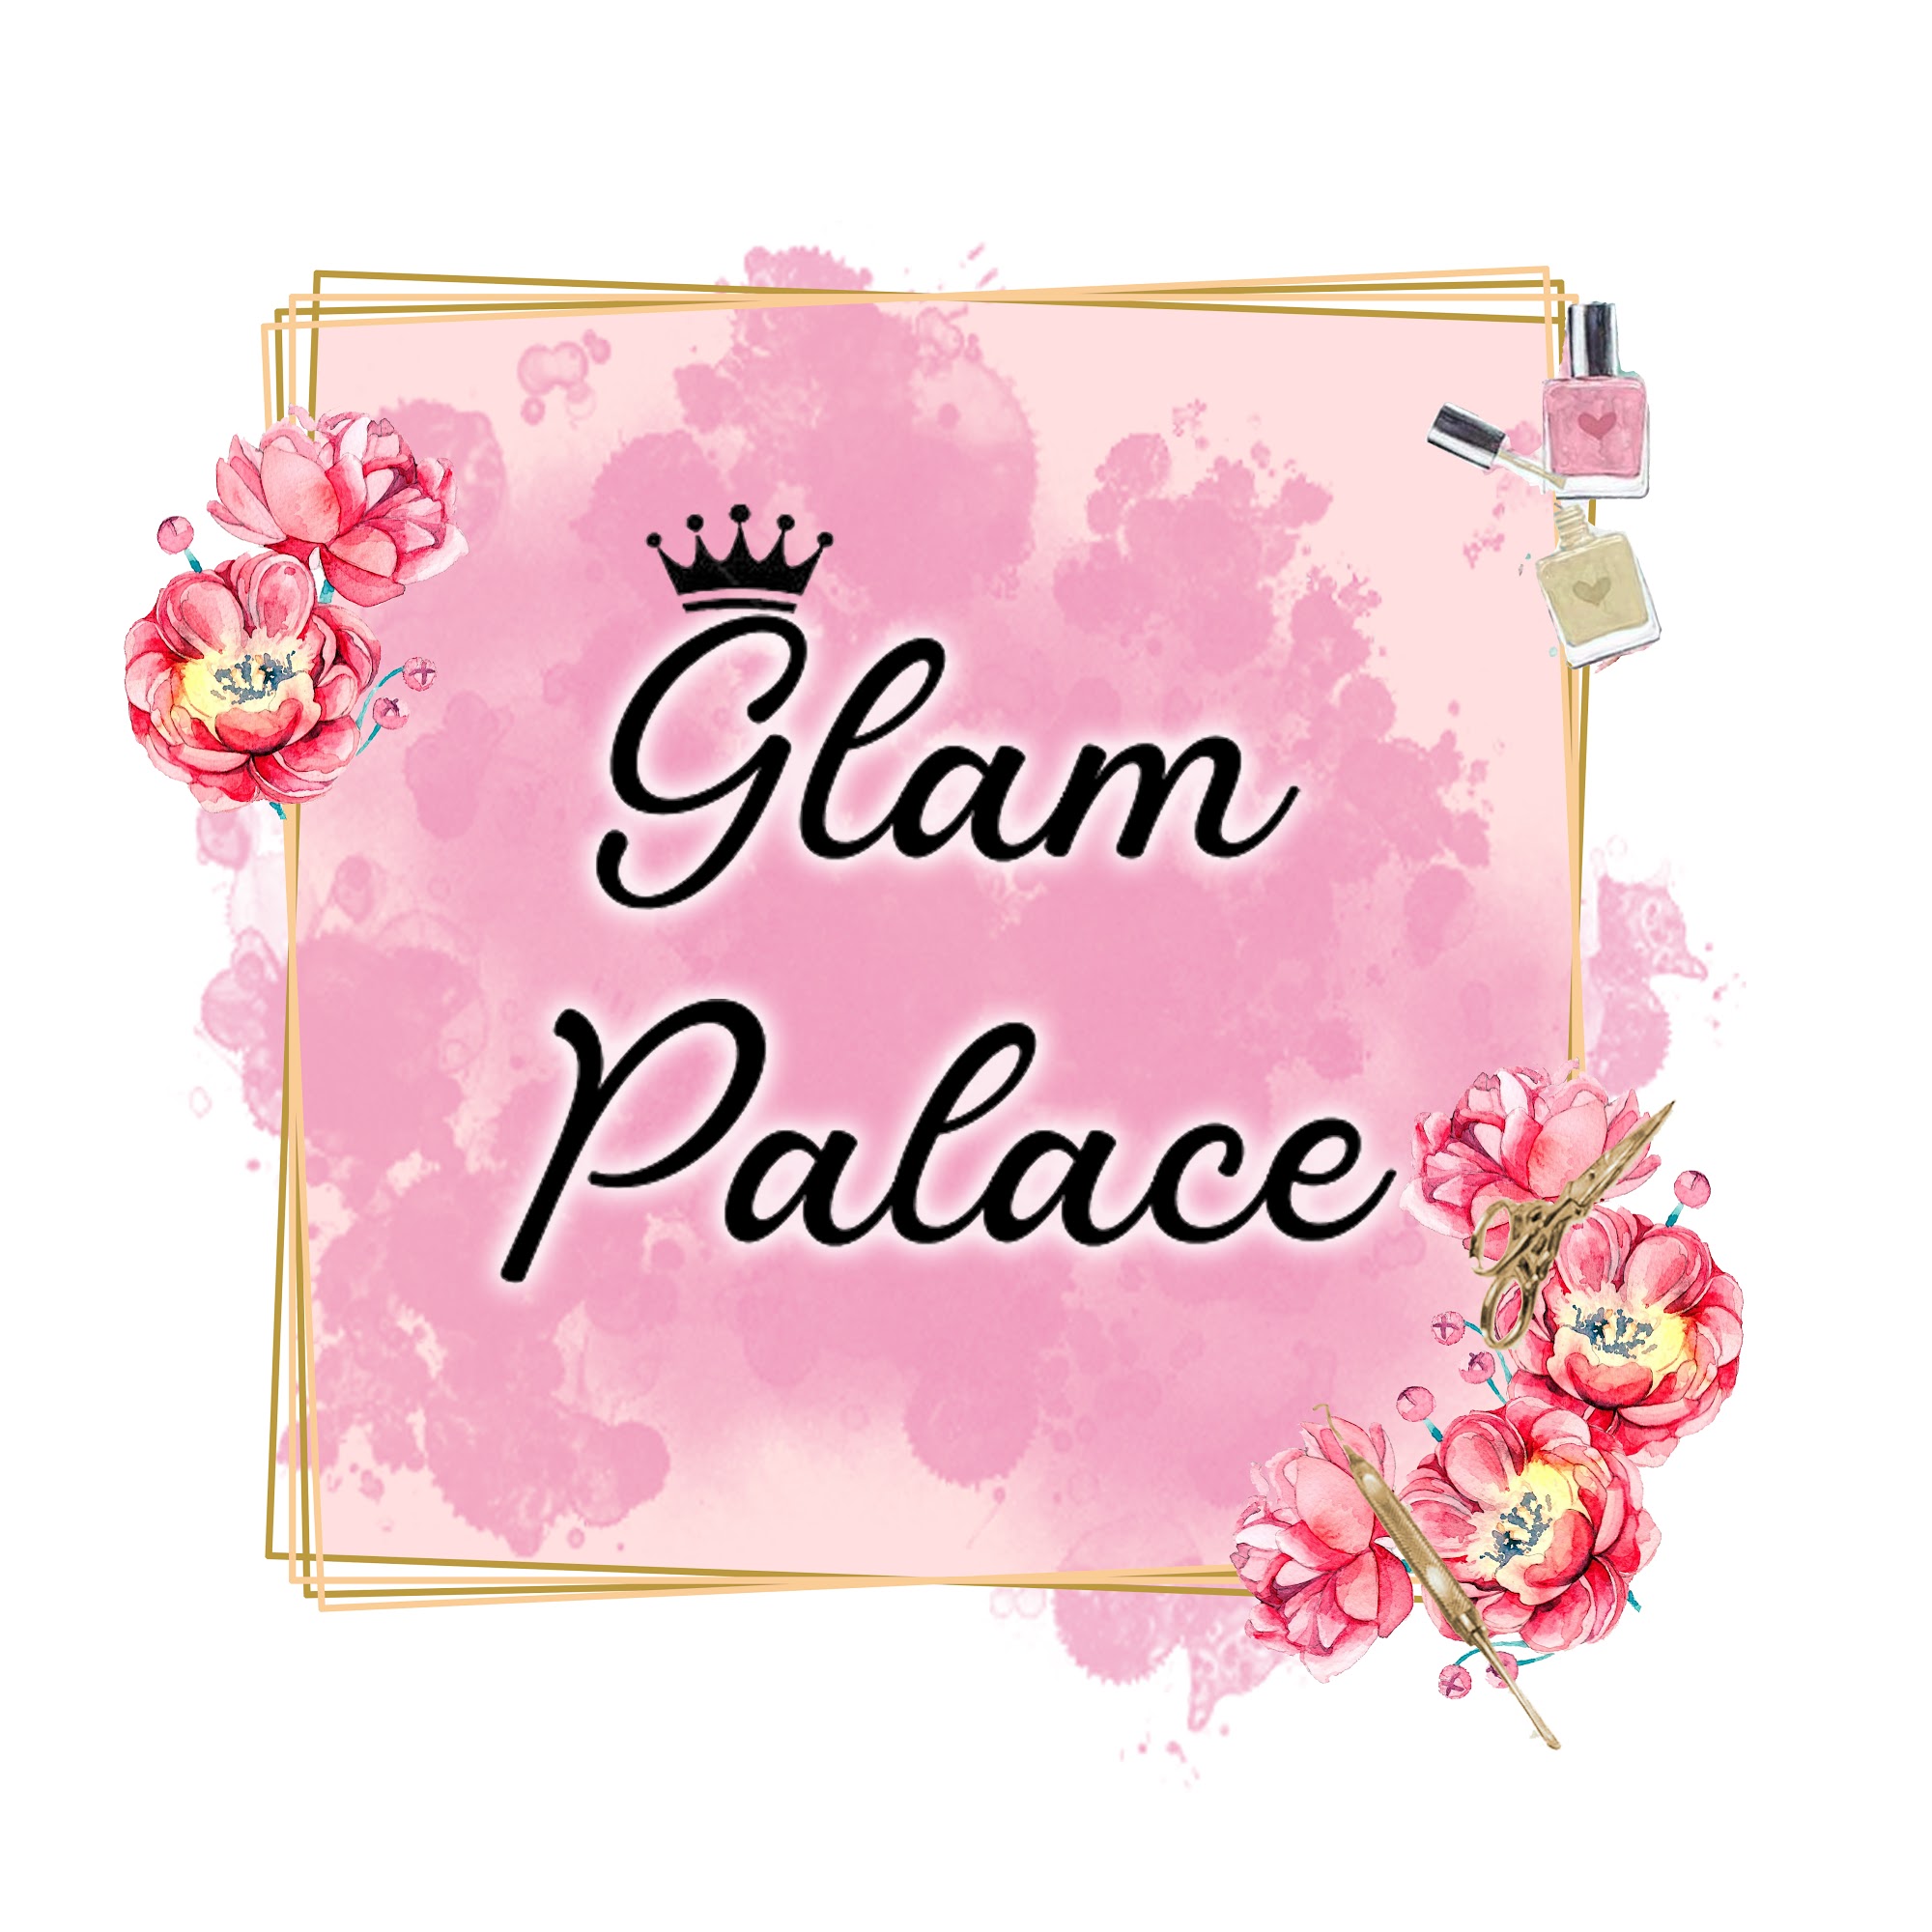 Glam Palace Nail Salon